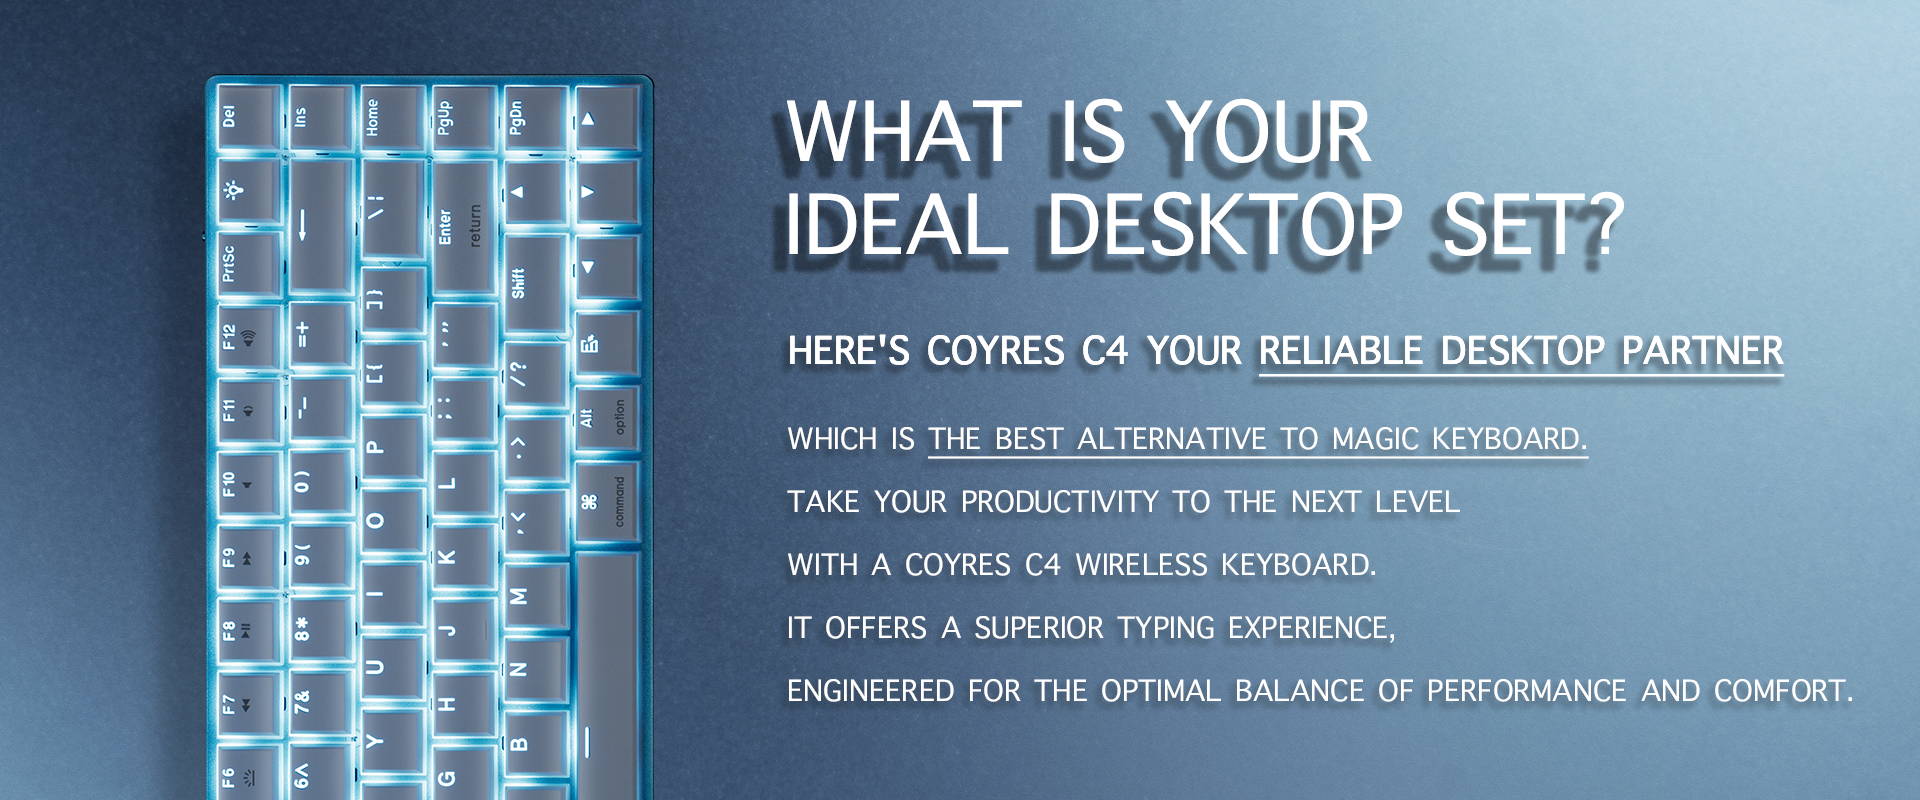 Coyres C4 mechanical keyboard - what is your ideal desktop set? Coyres C4